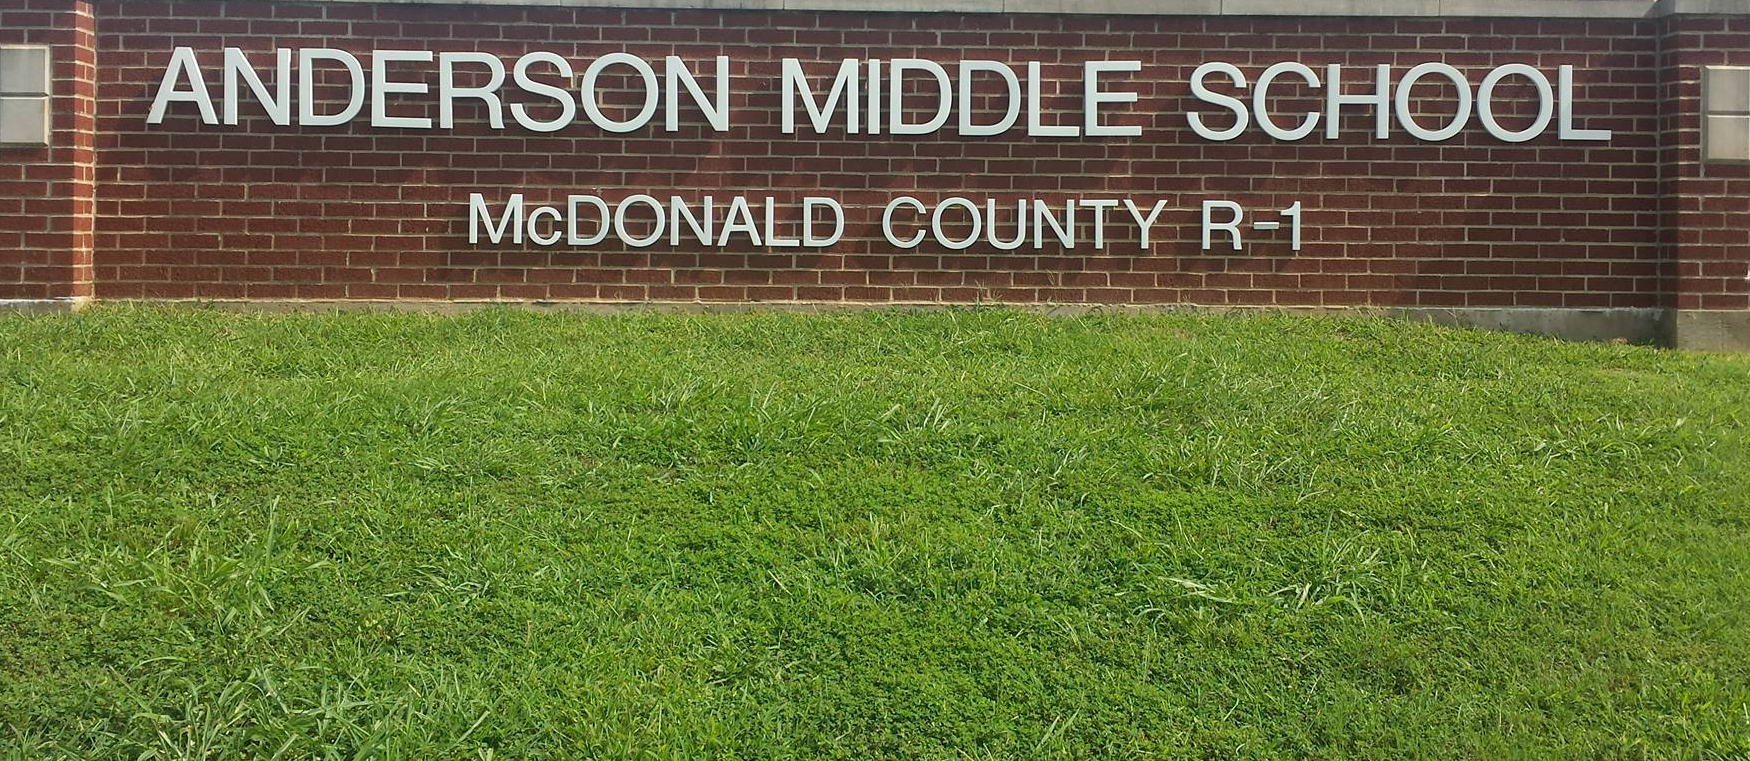 Anderson Middle School